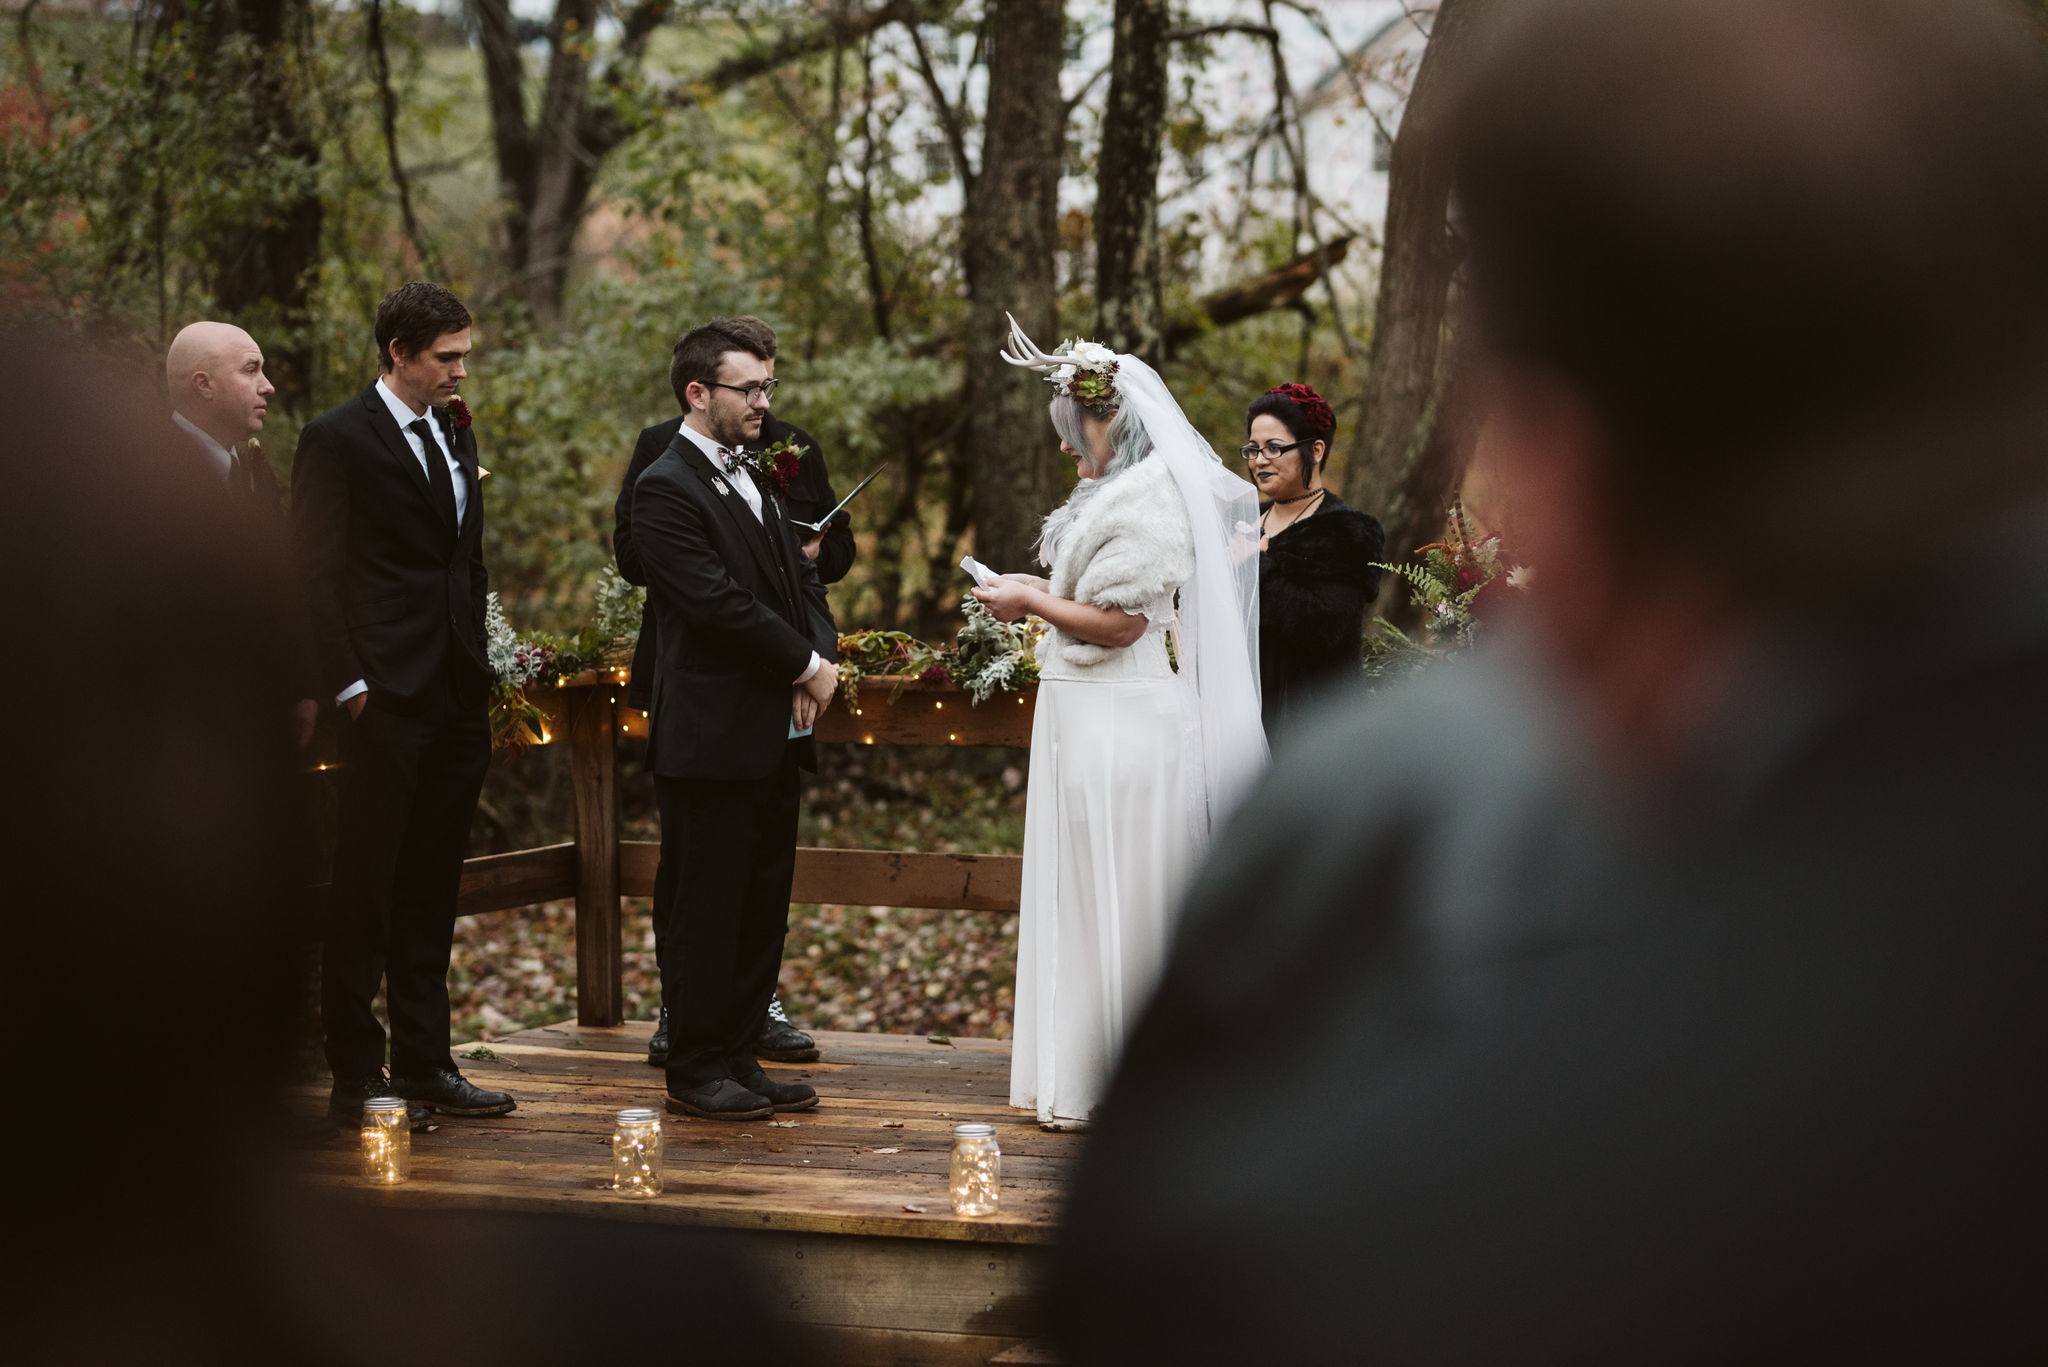  Maryland, Baltimore Wedding Photographer, Backyard Wedding, Fall, October, Dark Bohemian, Whimsical, Fun, Bride and Groom Exchanging Vows, Fairy Lights in Mason Jars 